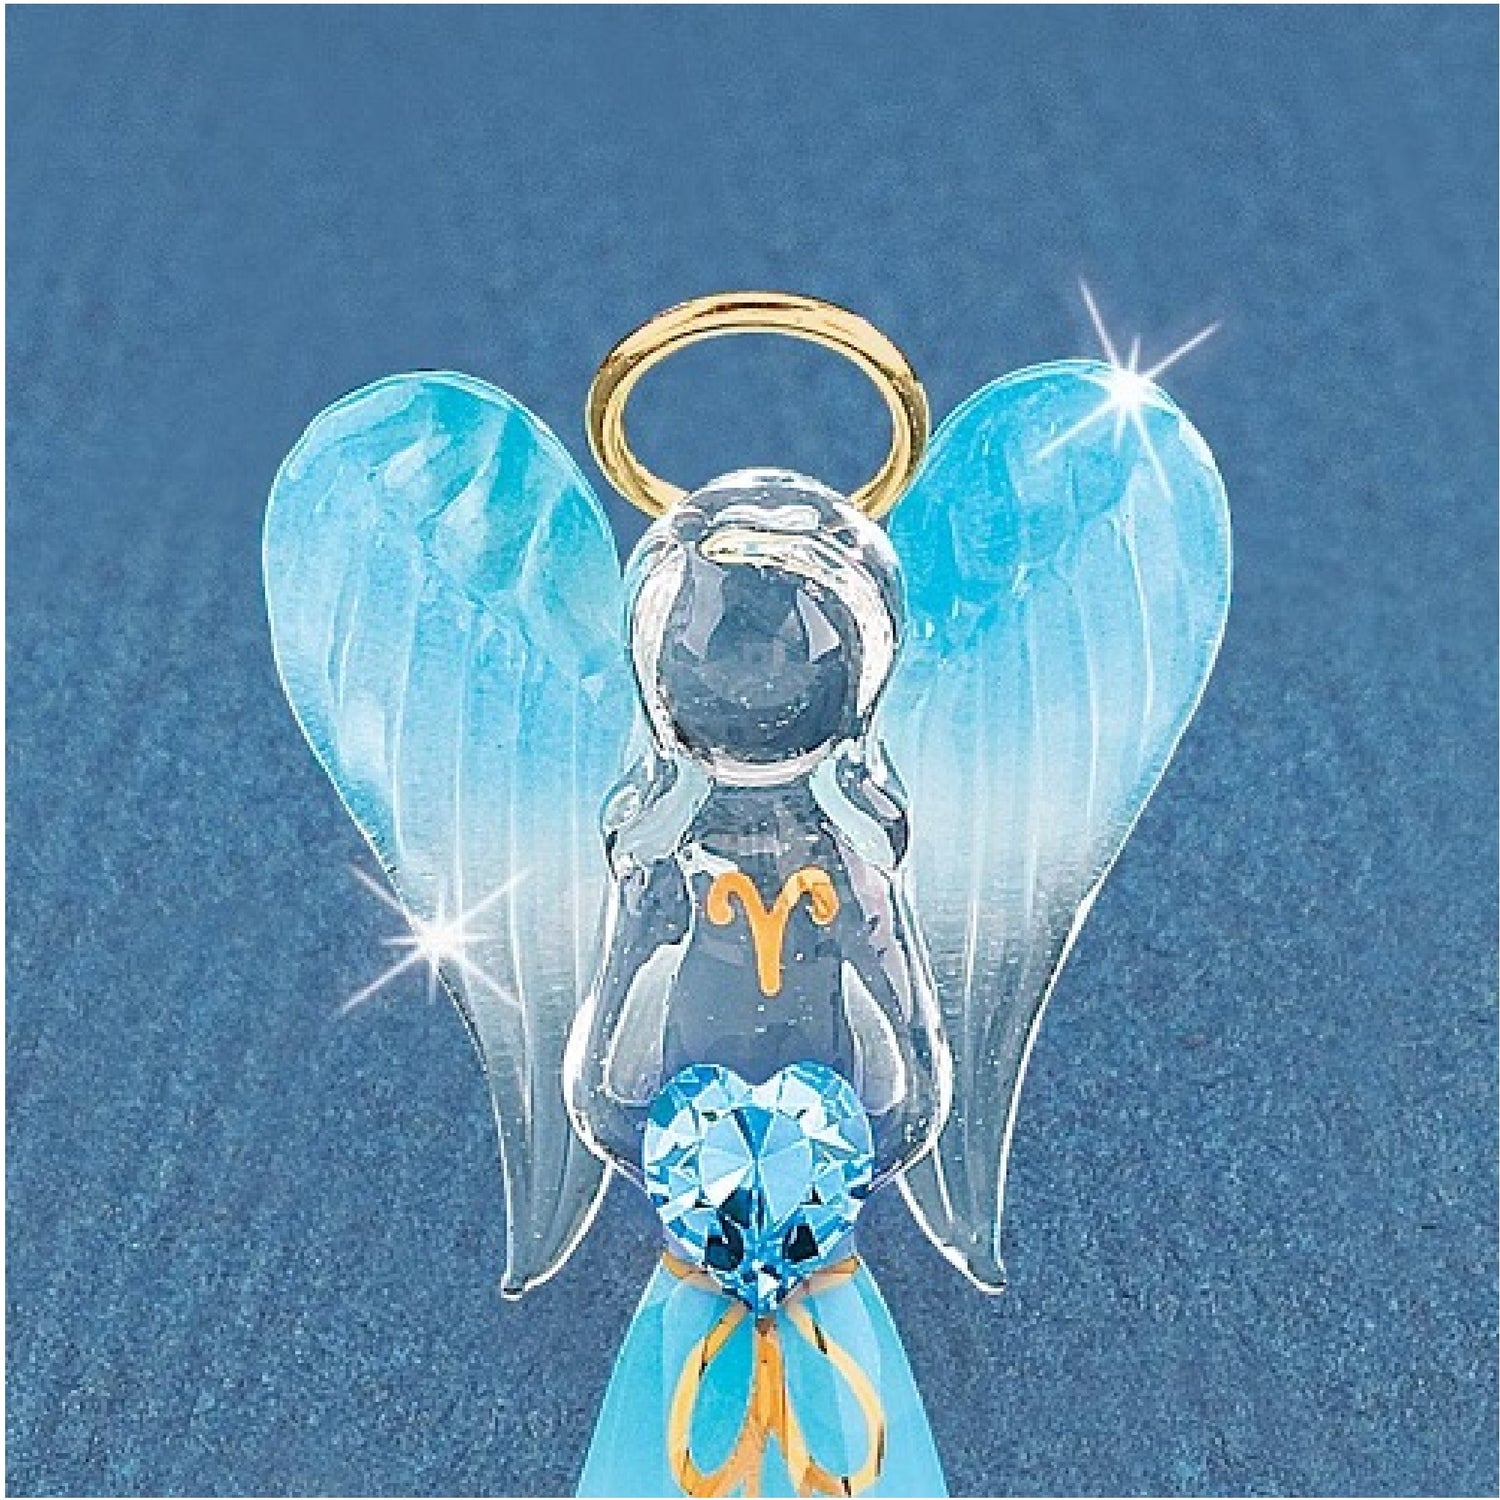 Glass Baron Heavenly Blue Angel Figurine